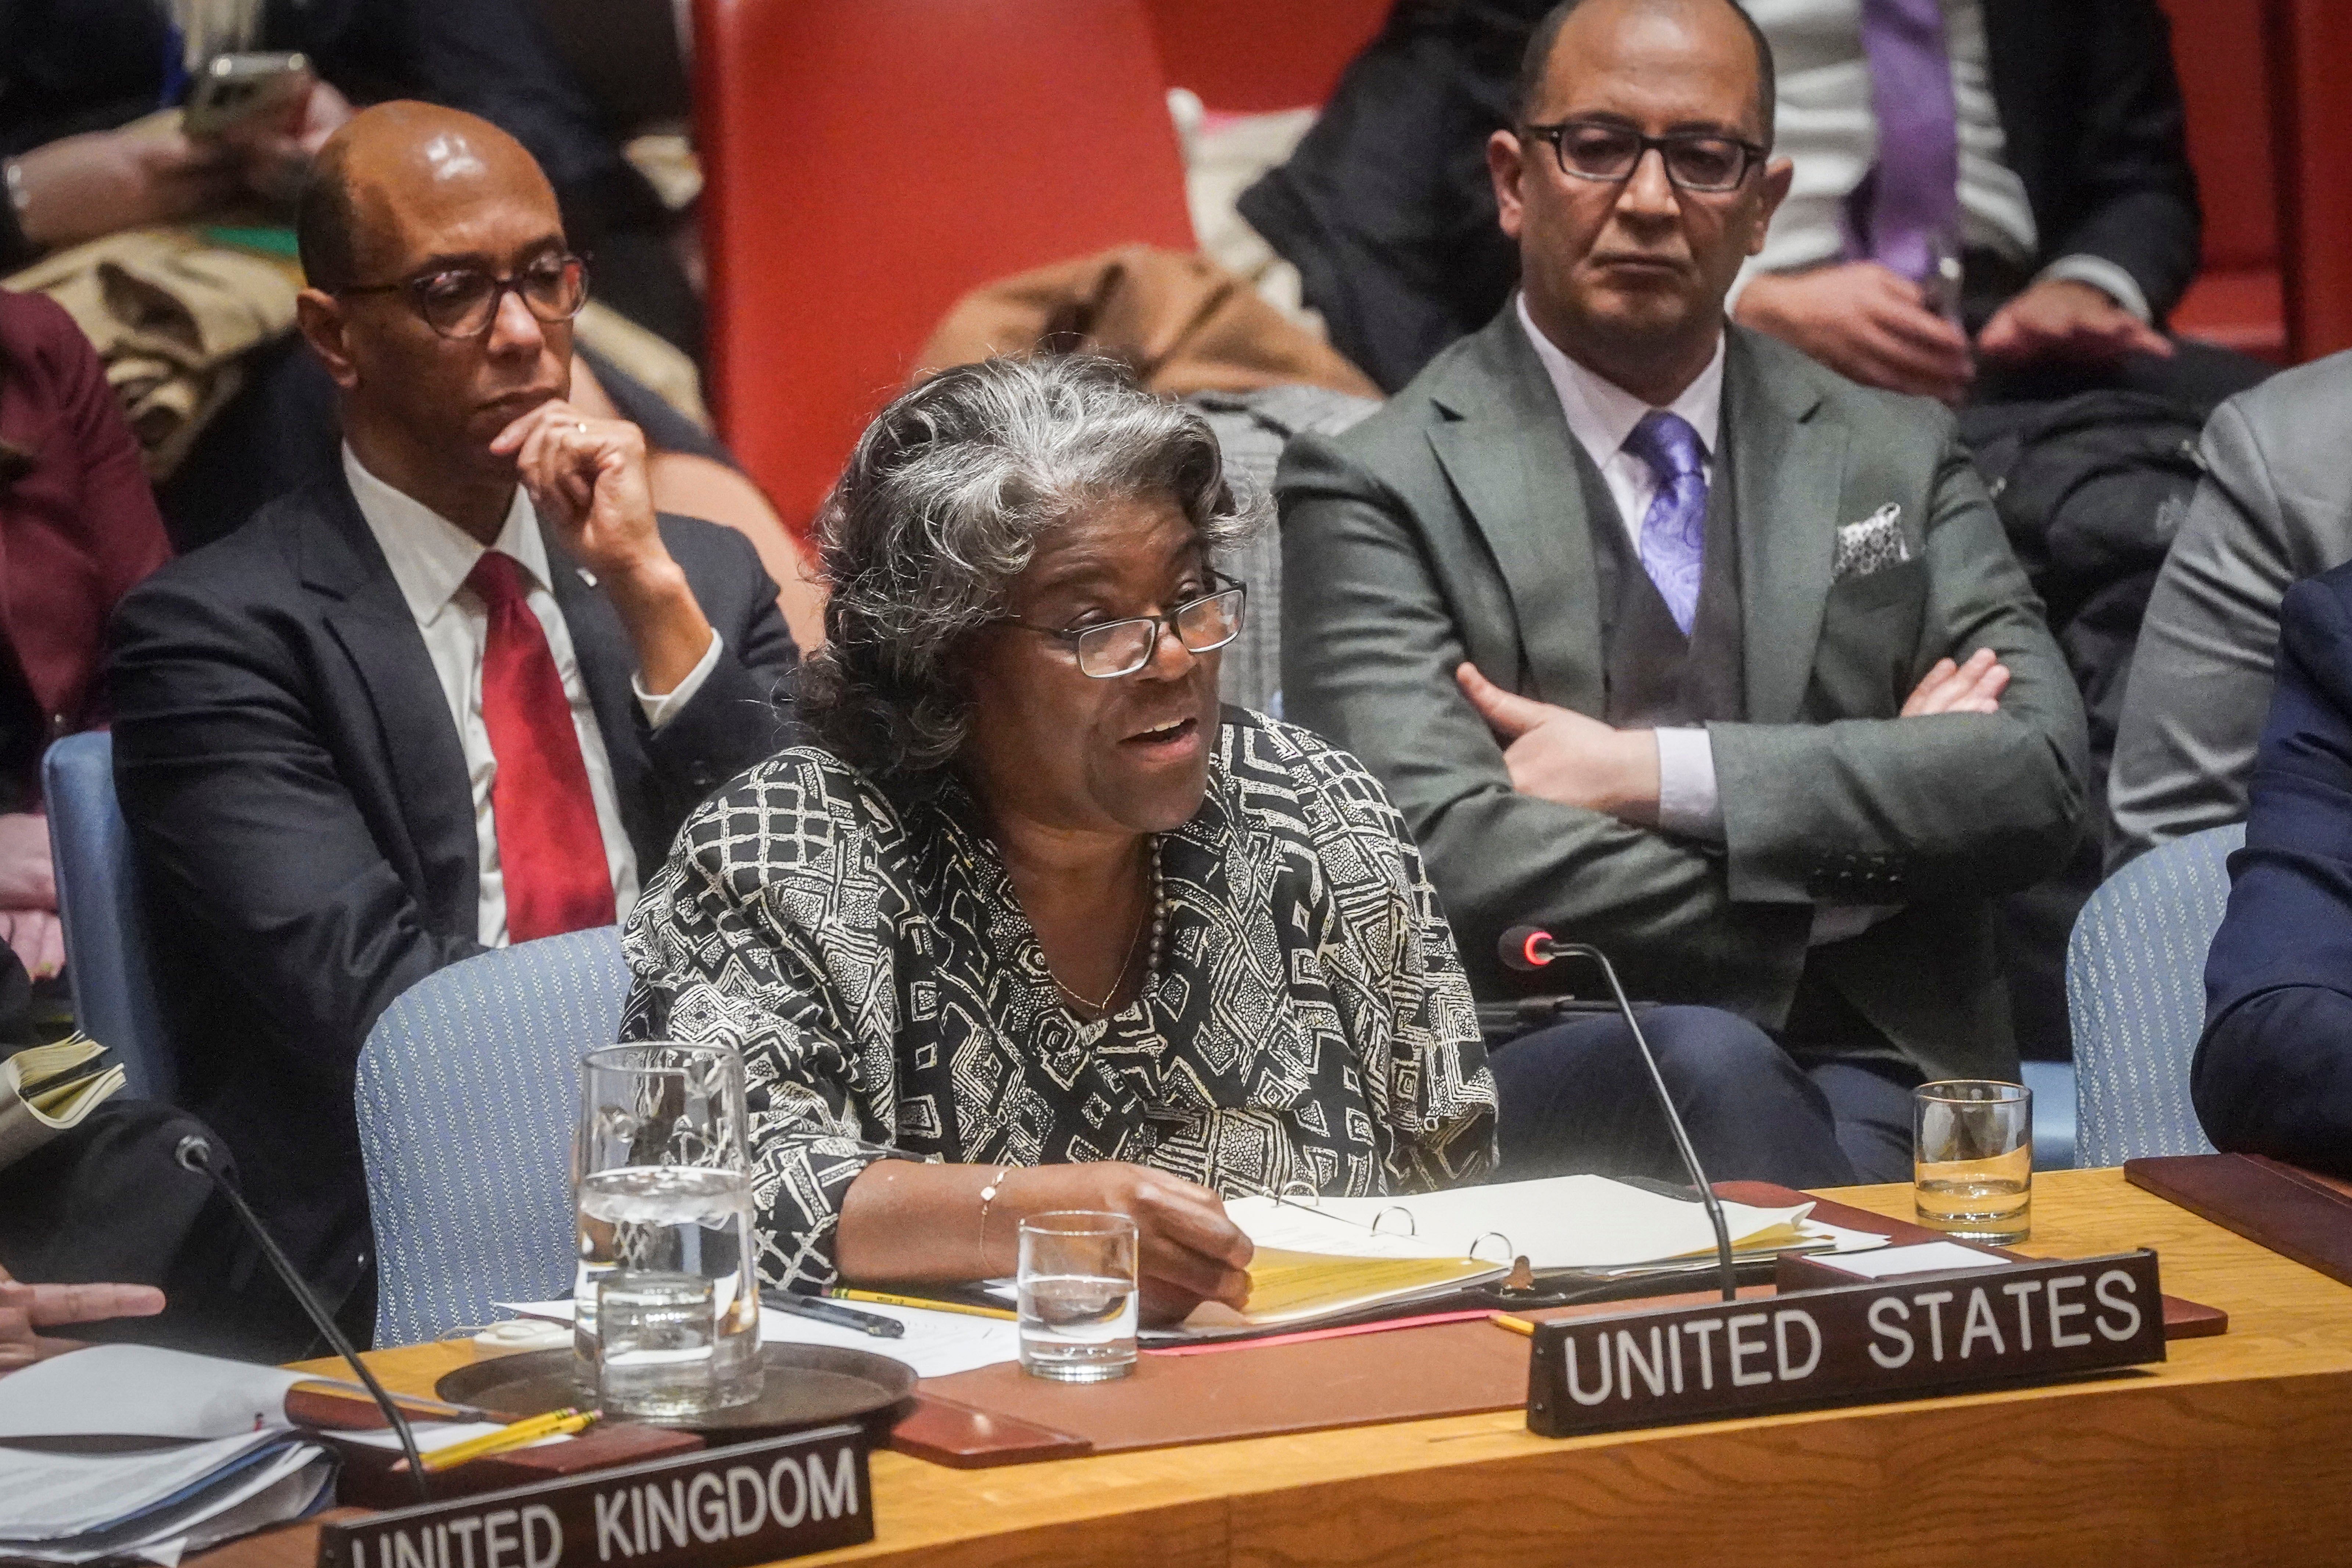 America’s UN ambassador Linda Thomas-Greenfield speaks on the resolution